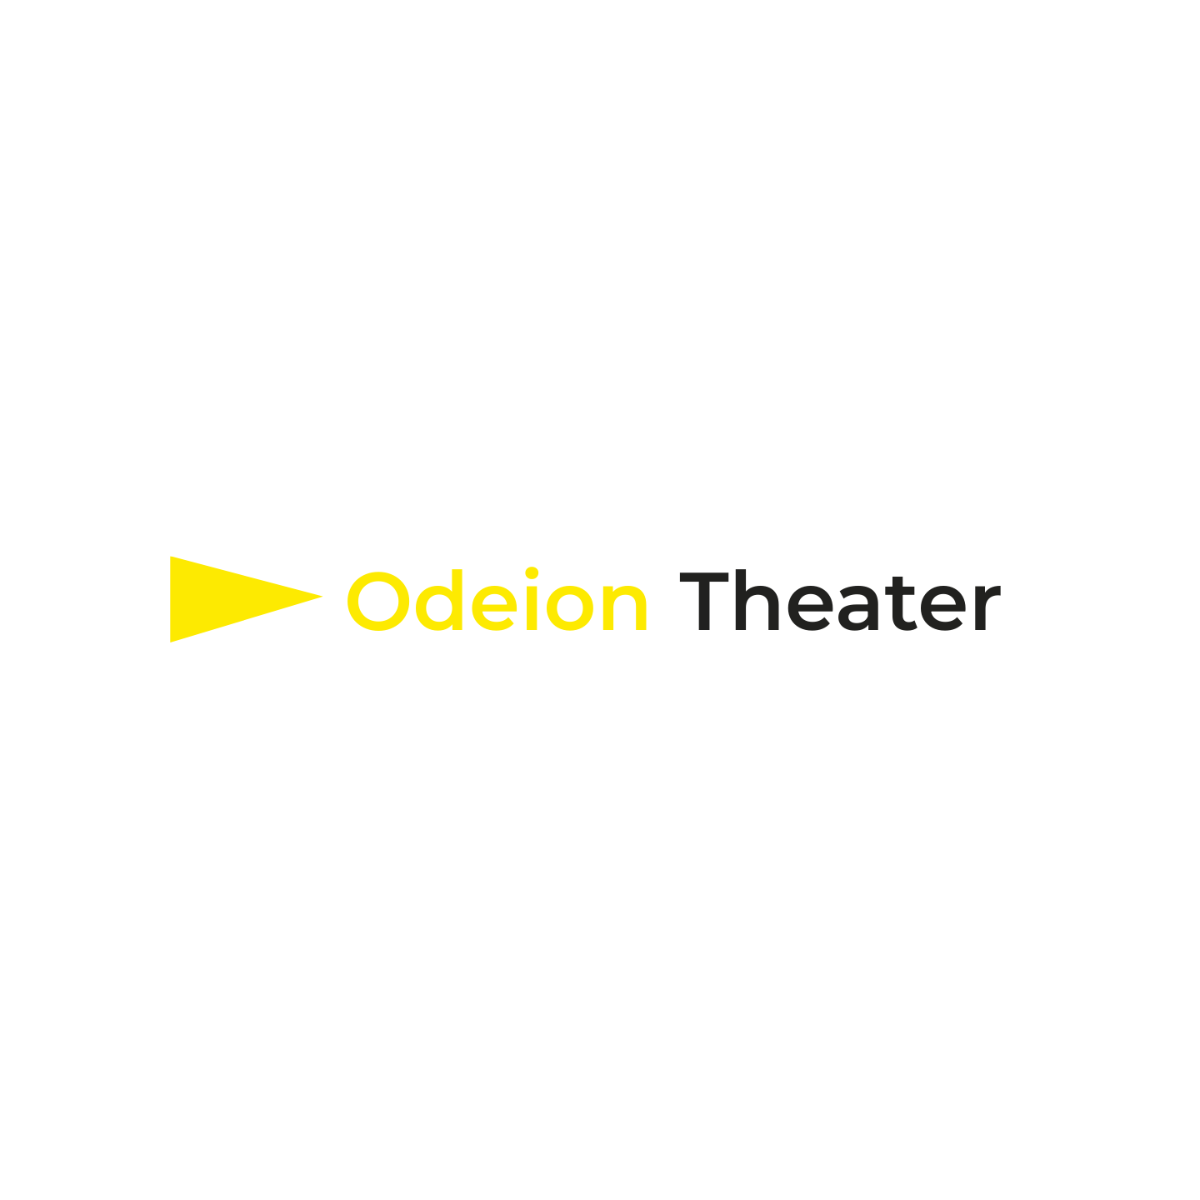 Theater Company Logo Template